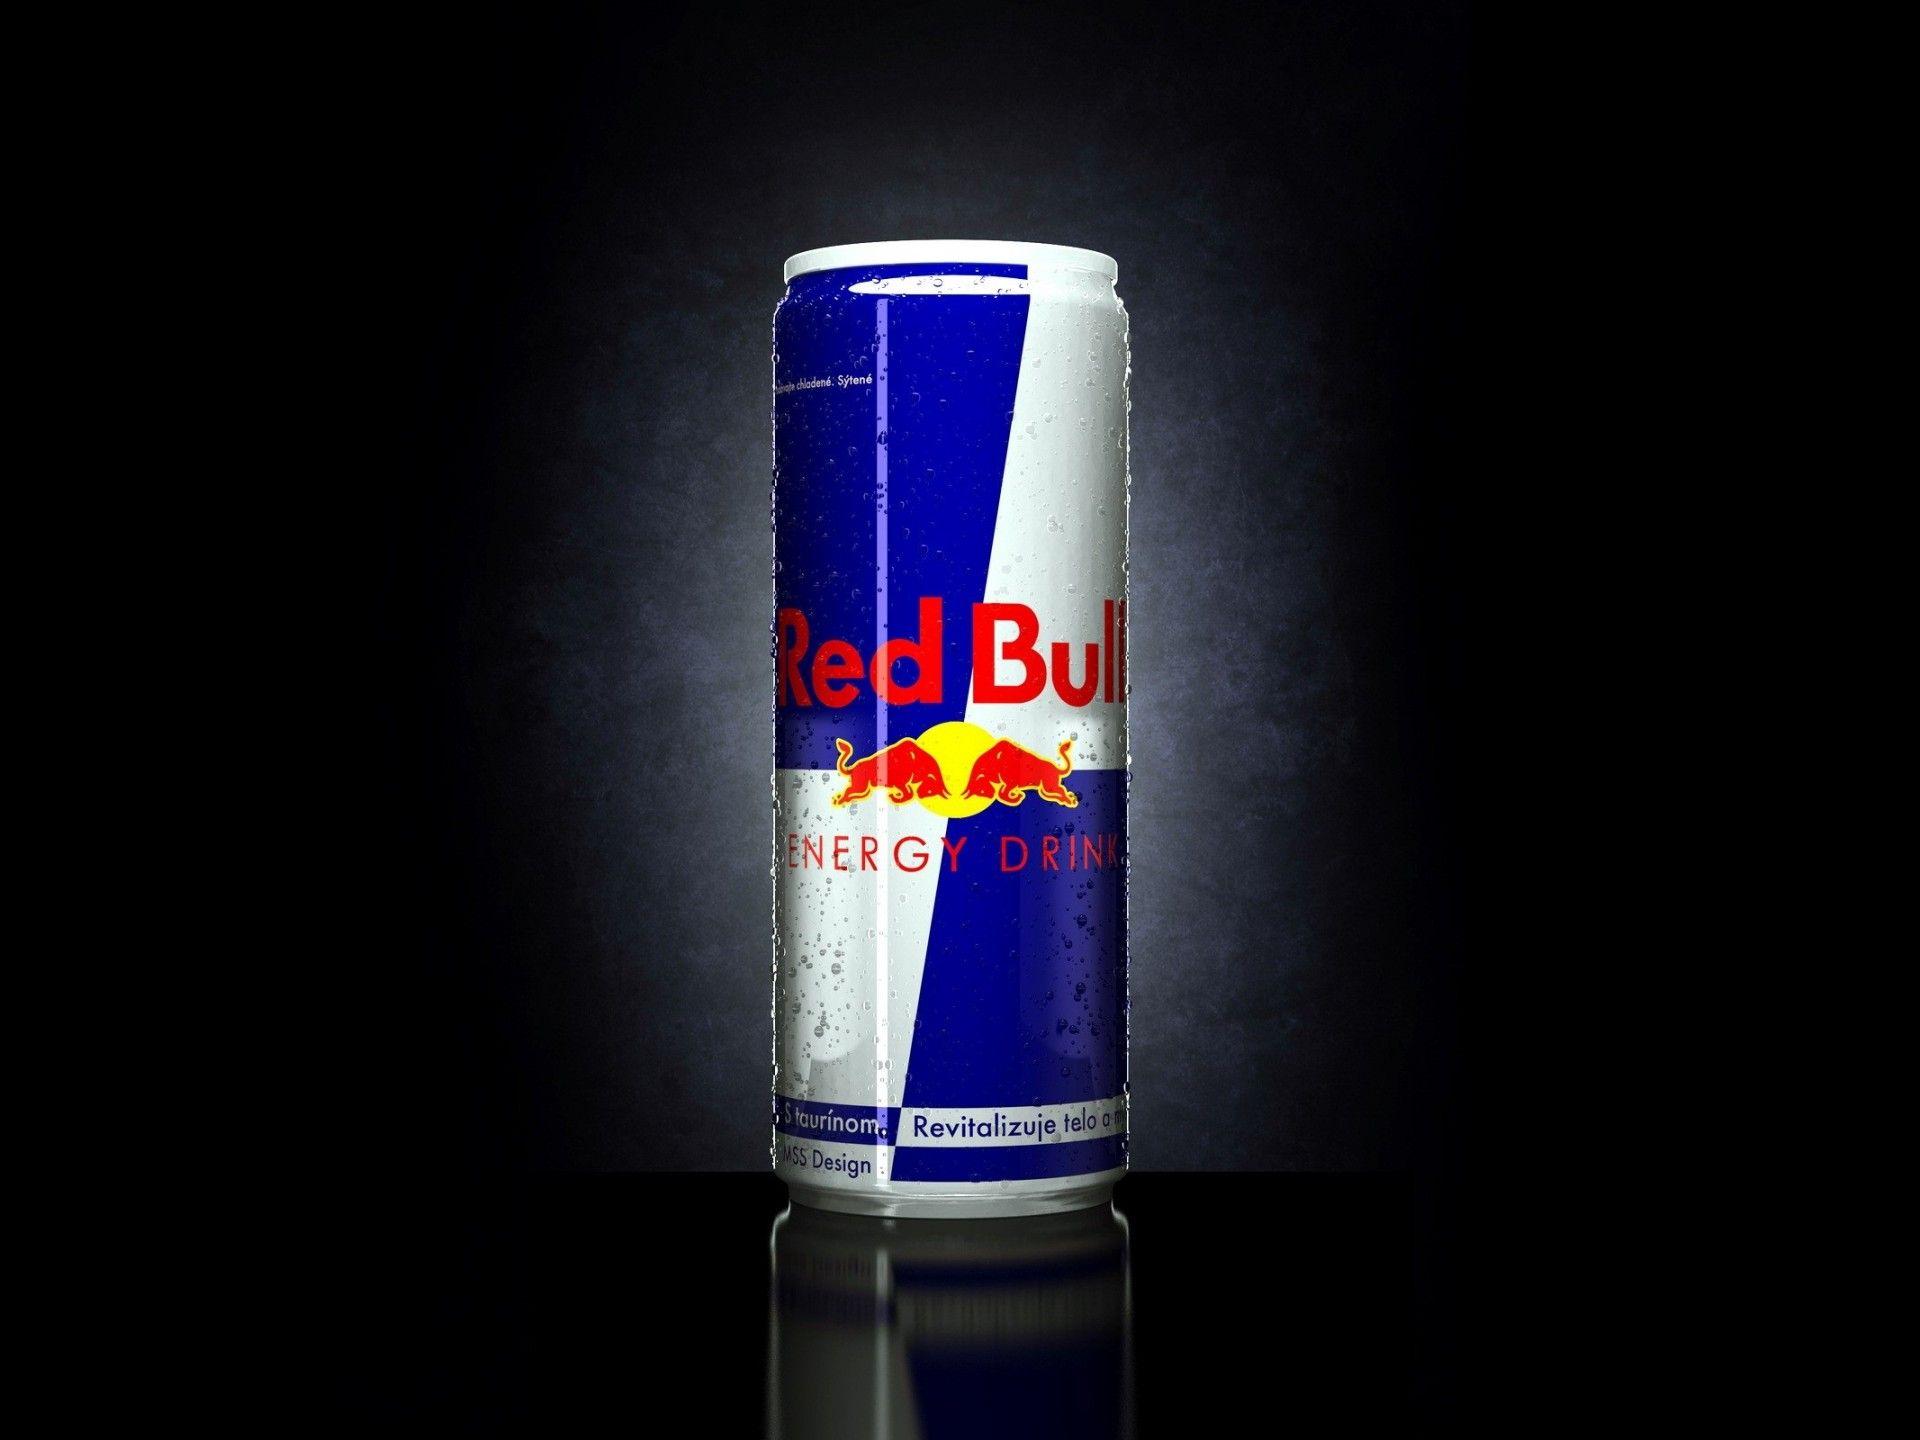 red bull energy drink logo hd